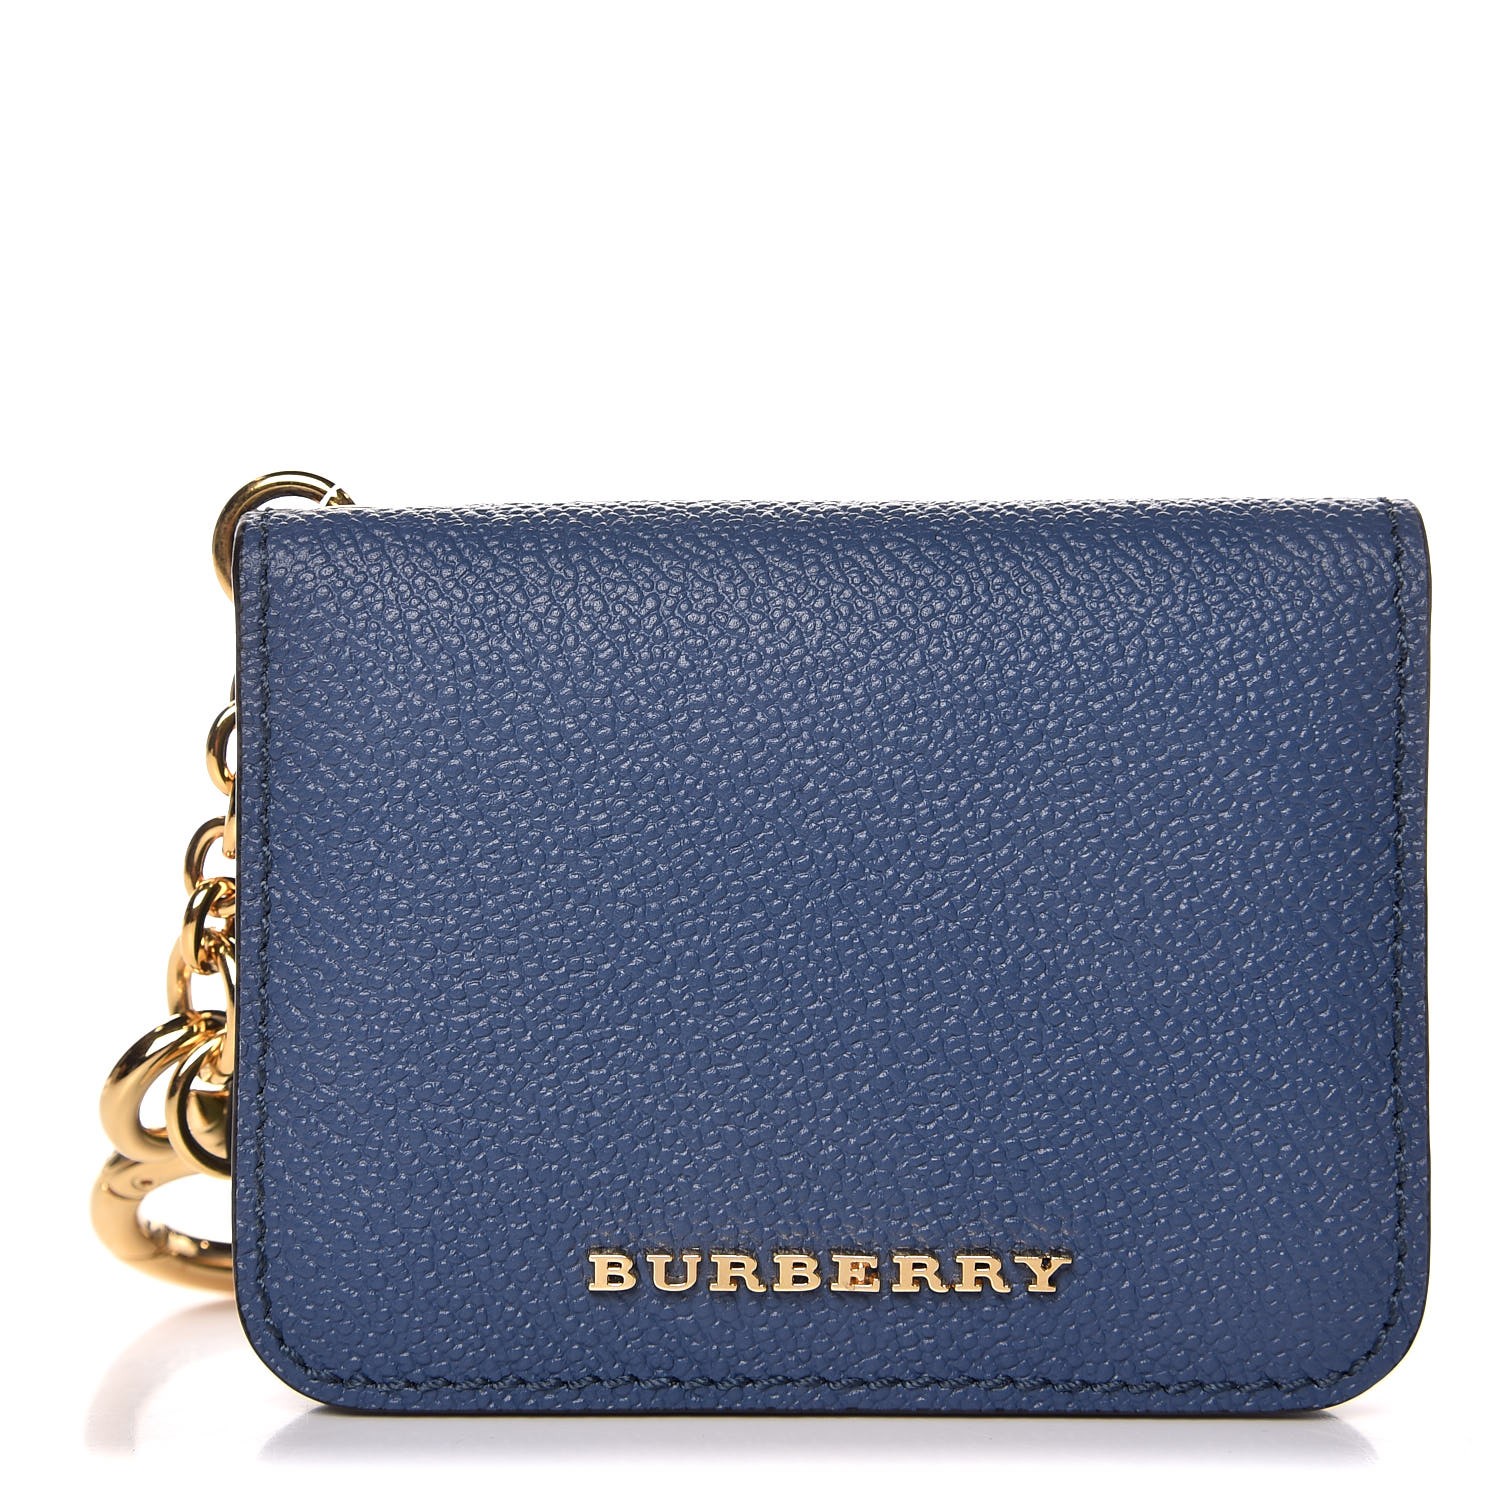 burberry id holder